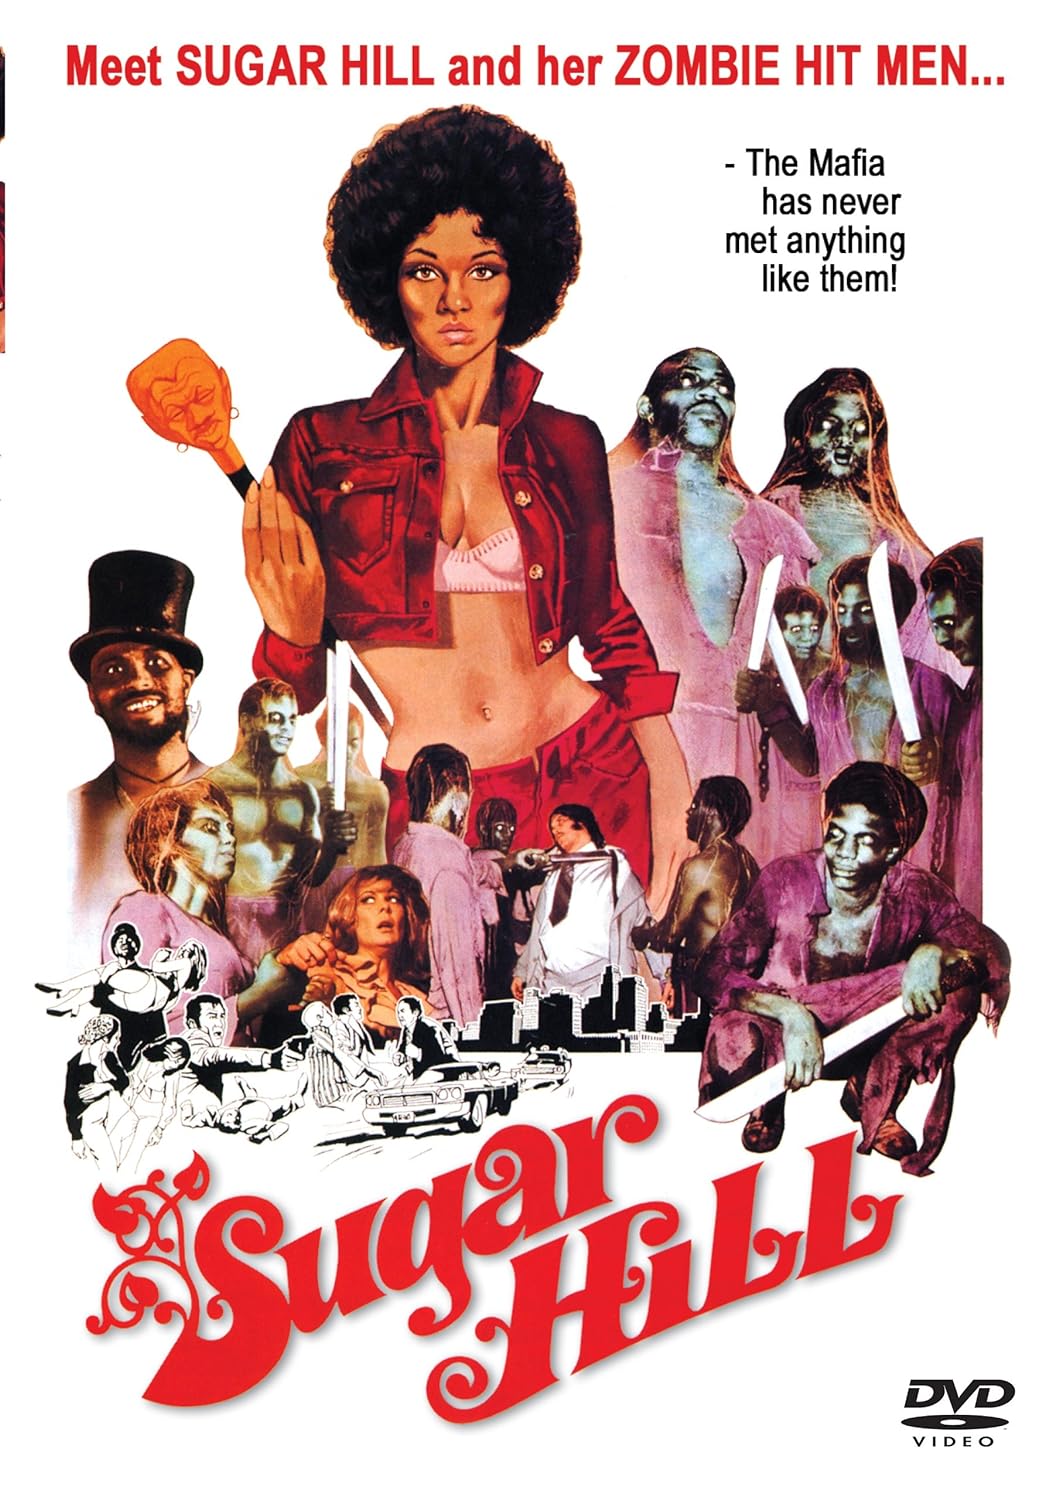 Sugar Hill 1974